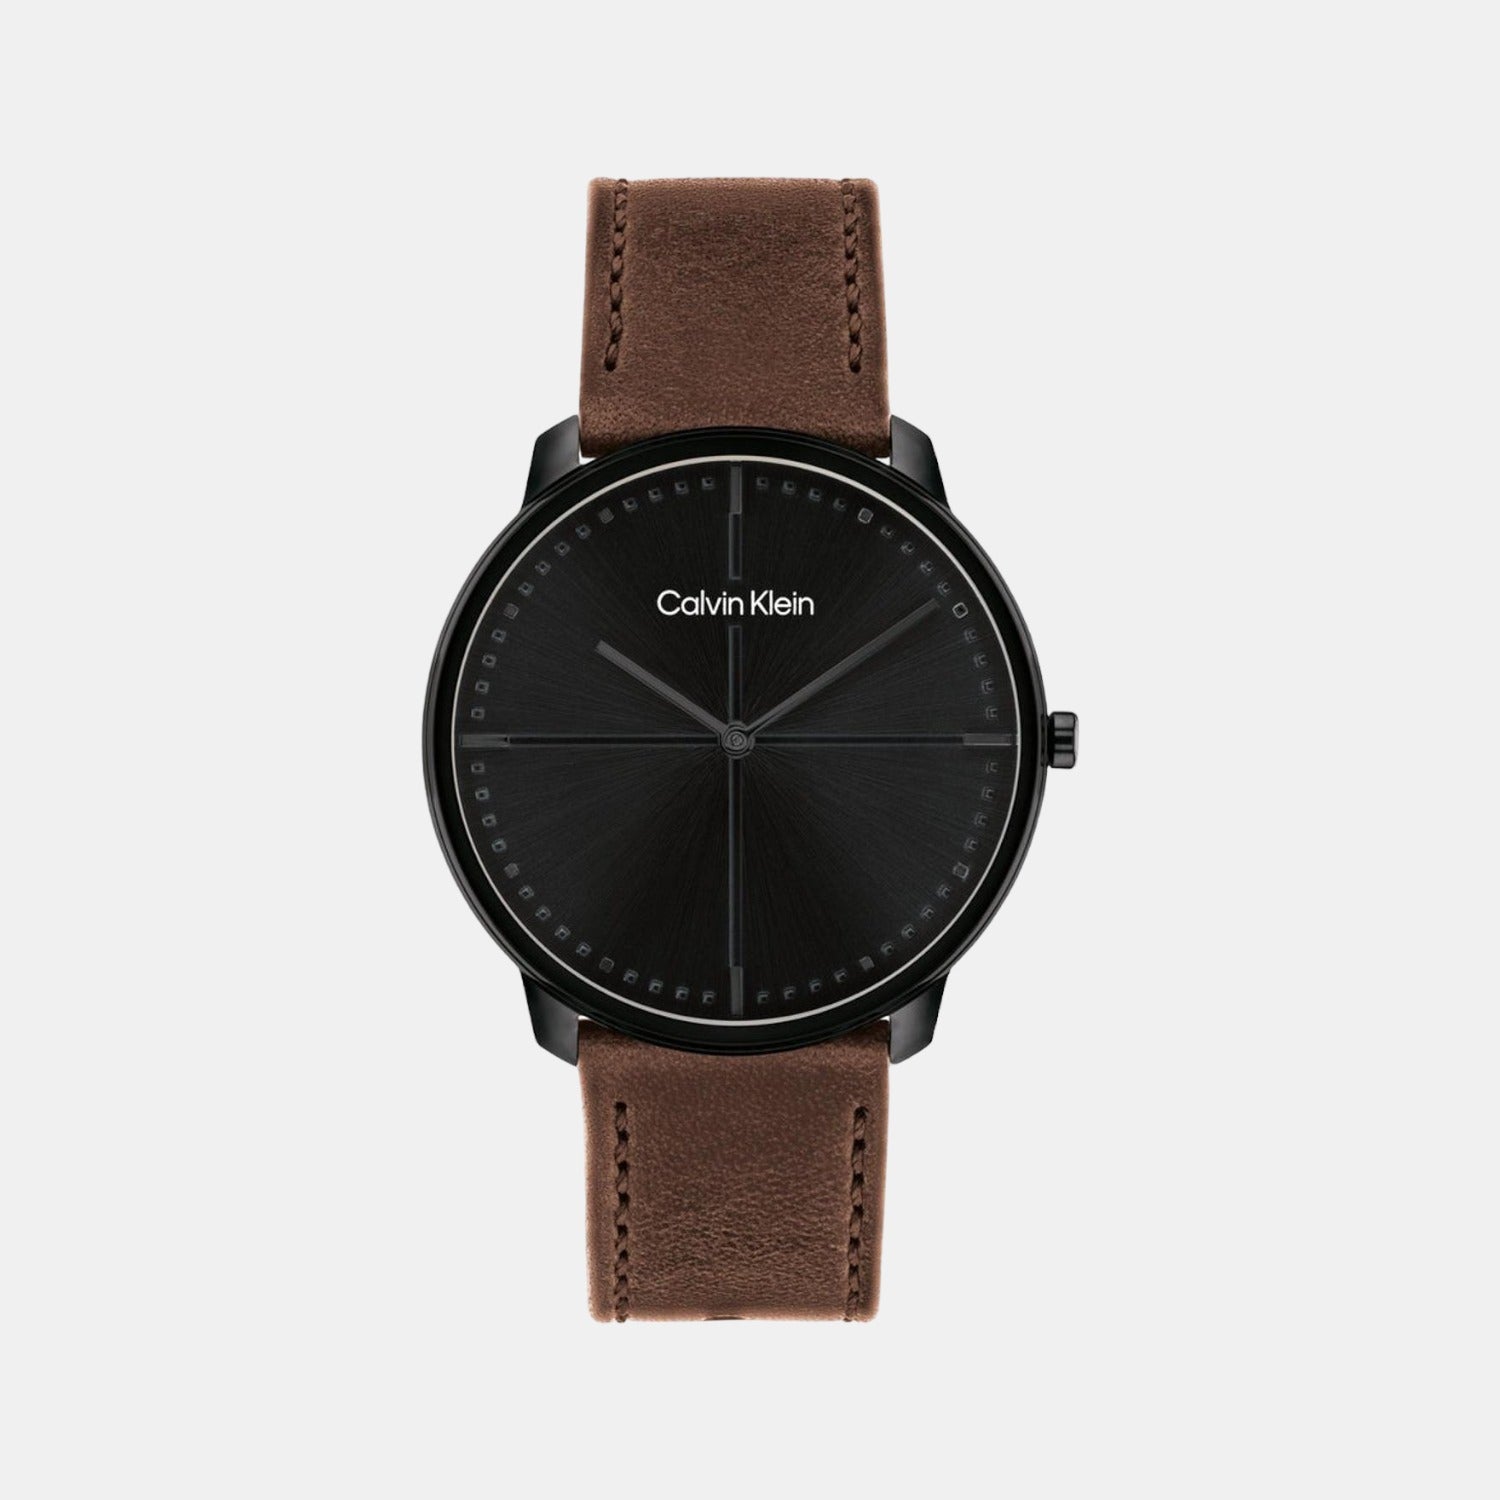 Calvin Klein – The Watch Factory ®